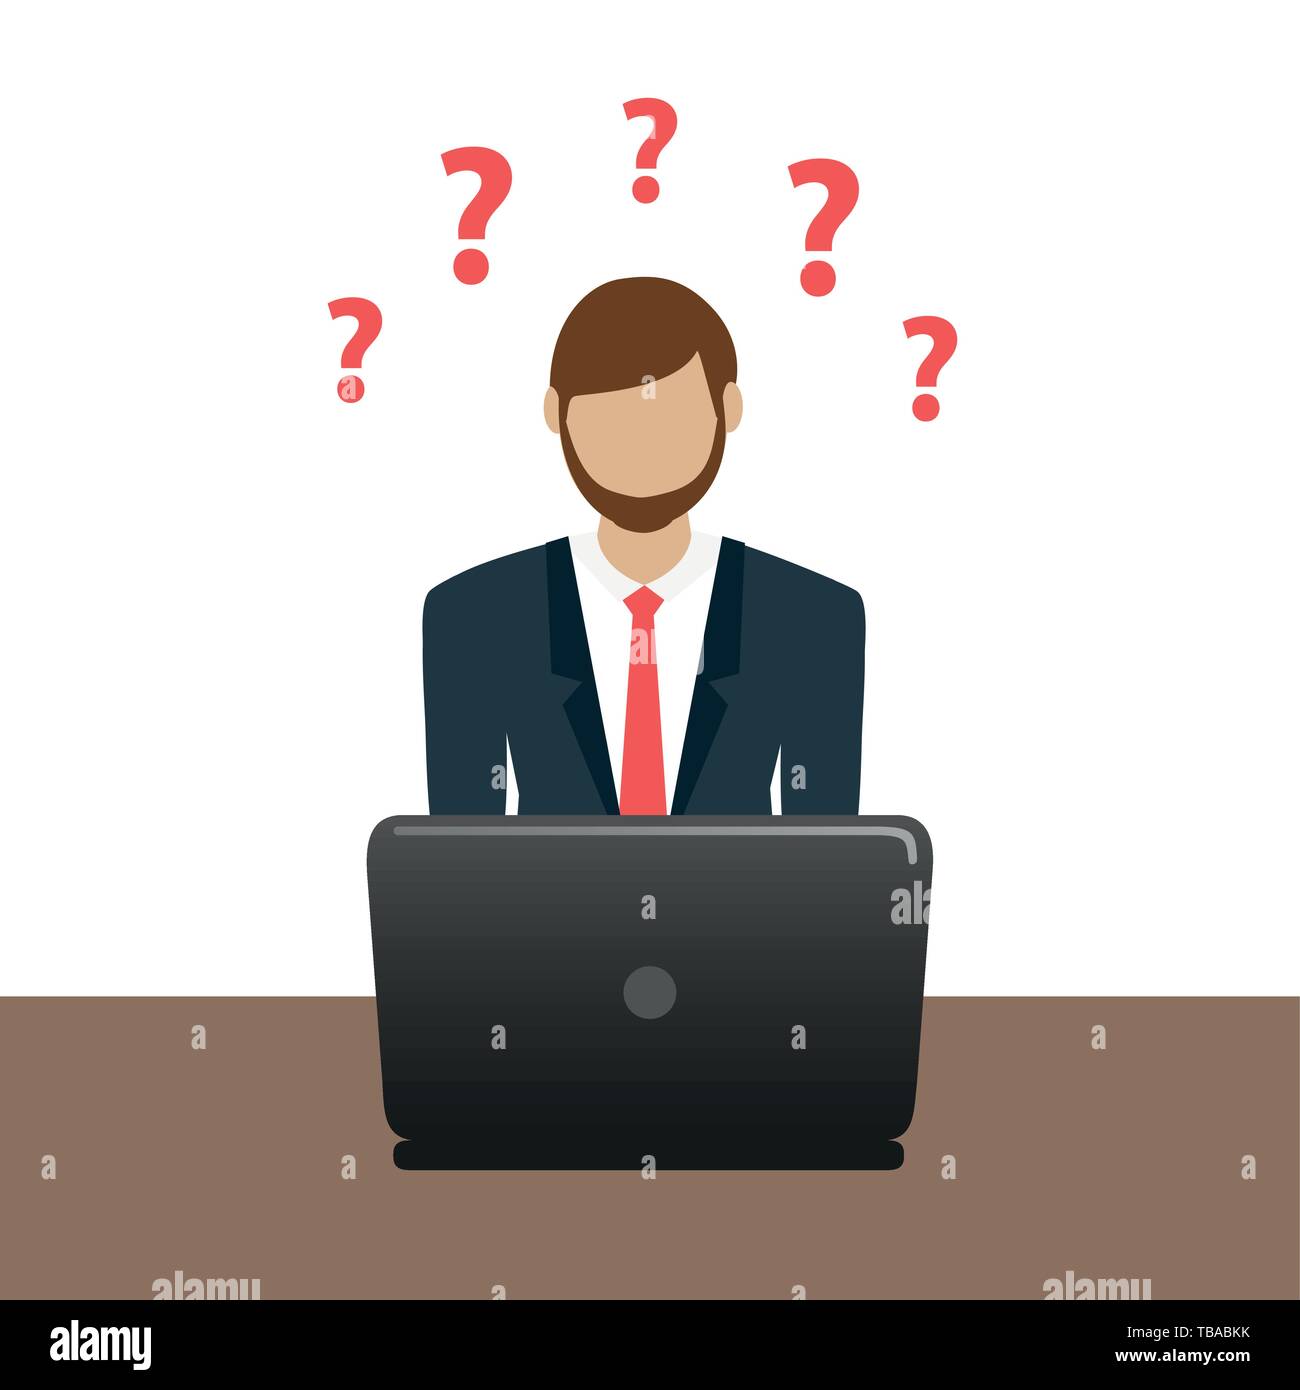 Business Mann auf dem Laptop hat viele Fragen Vektor-illustration EPS 10. Stock Vektor